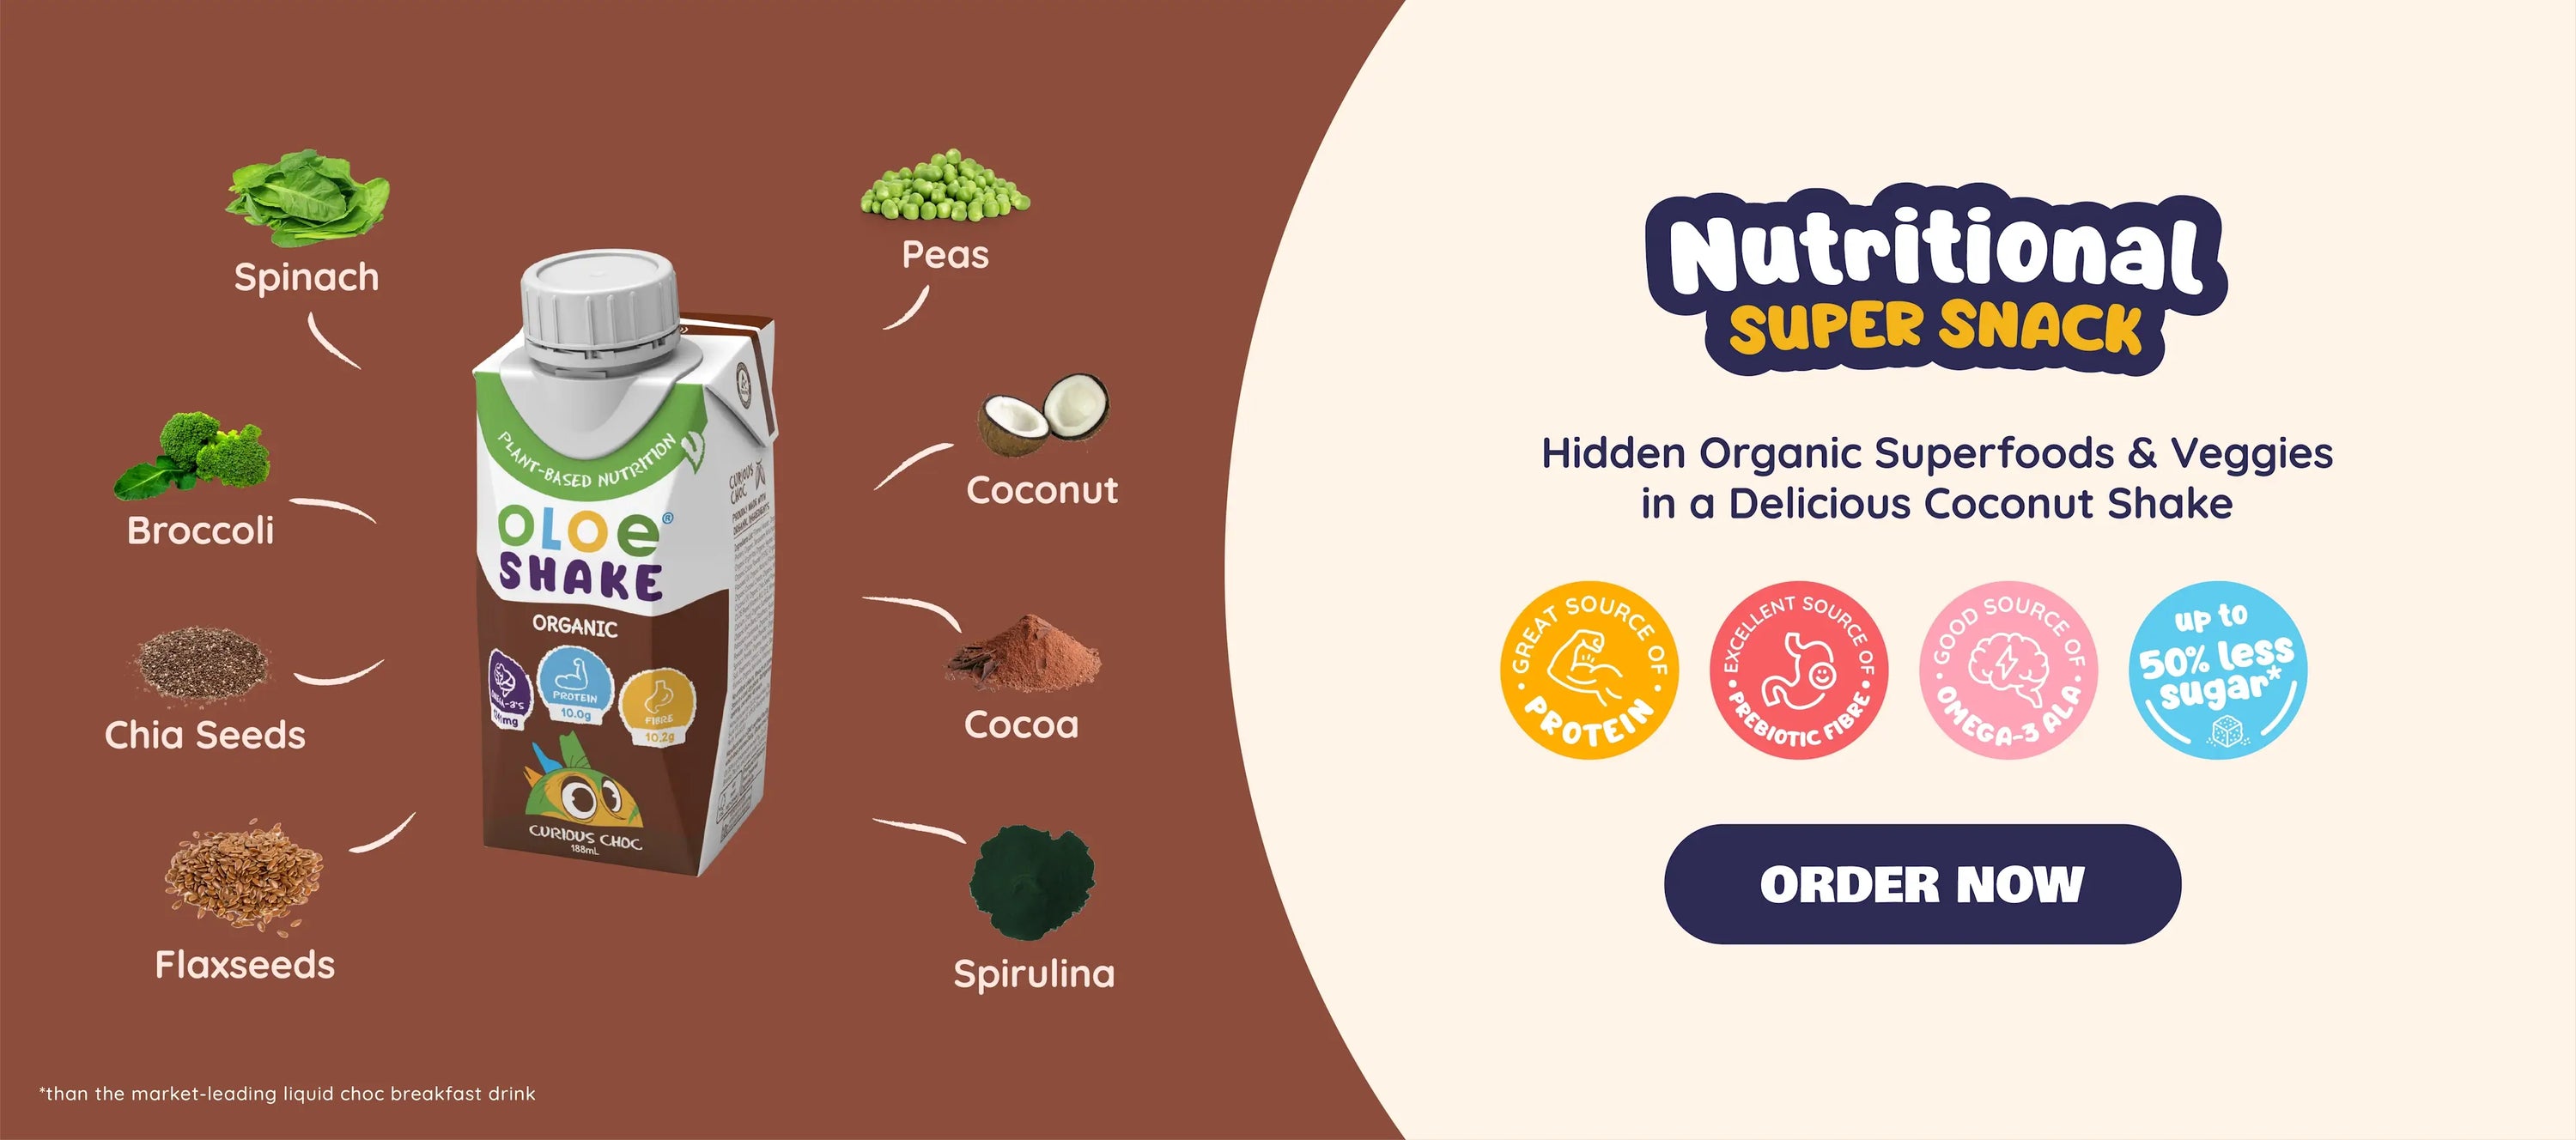 oloe-shake-mobile-desktop-banner-new-flavour-launch-nutritional-super-snack